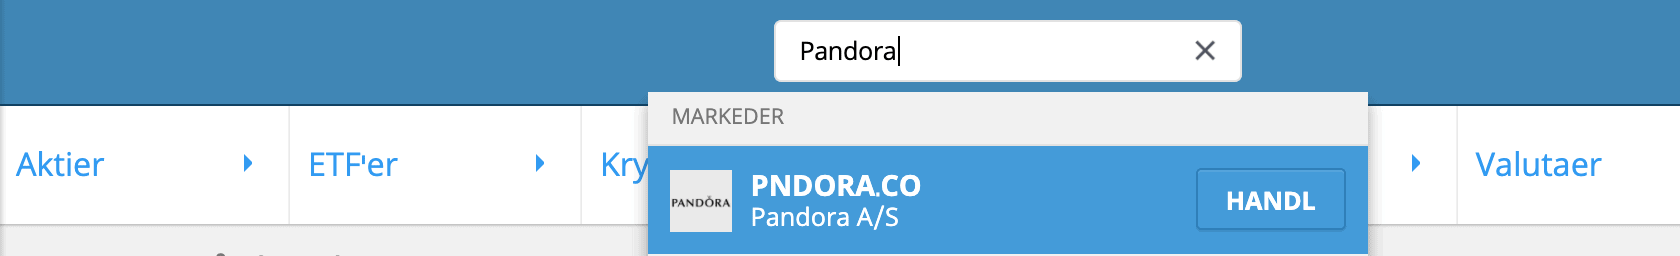 Soeg Pandora